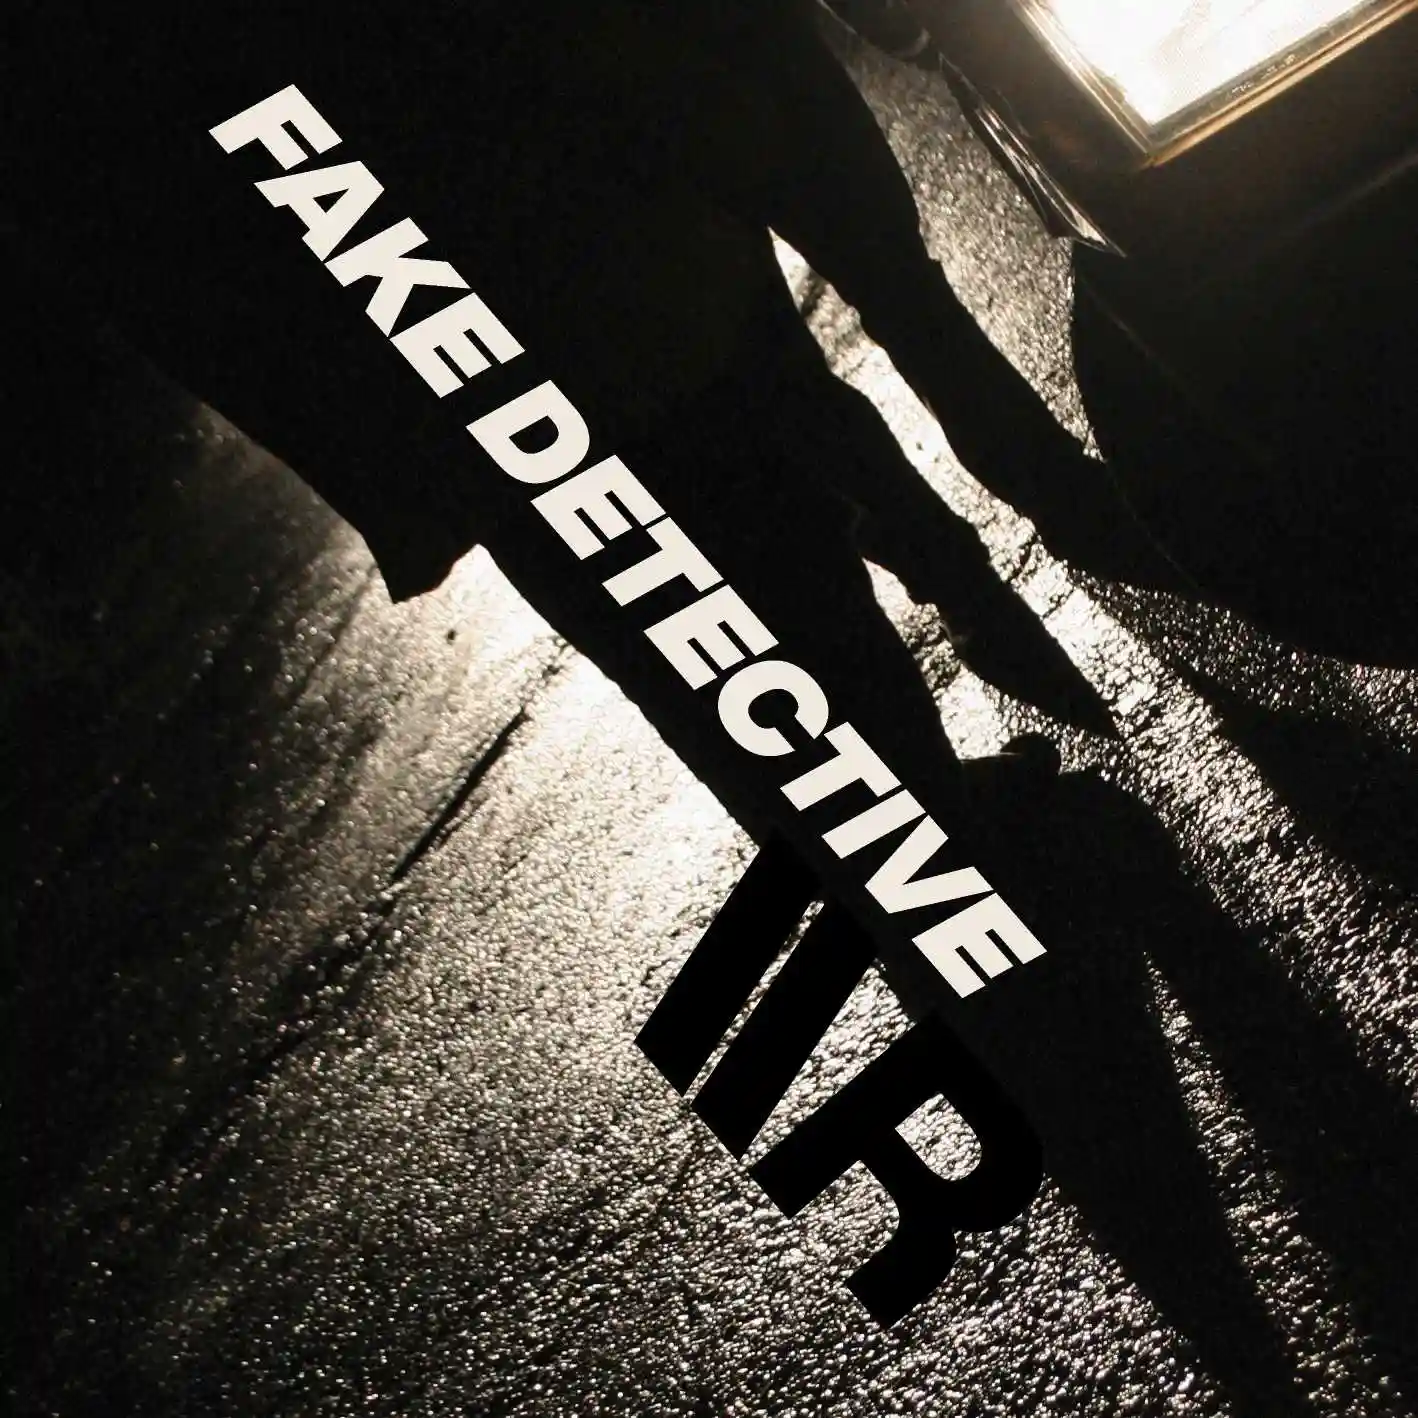 Album cover for “Fake Detective” by Viktor Van River